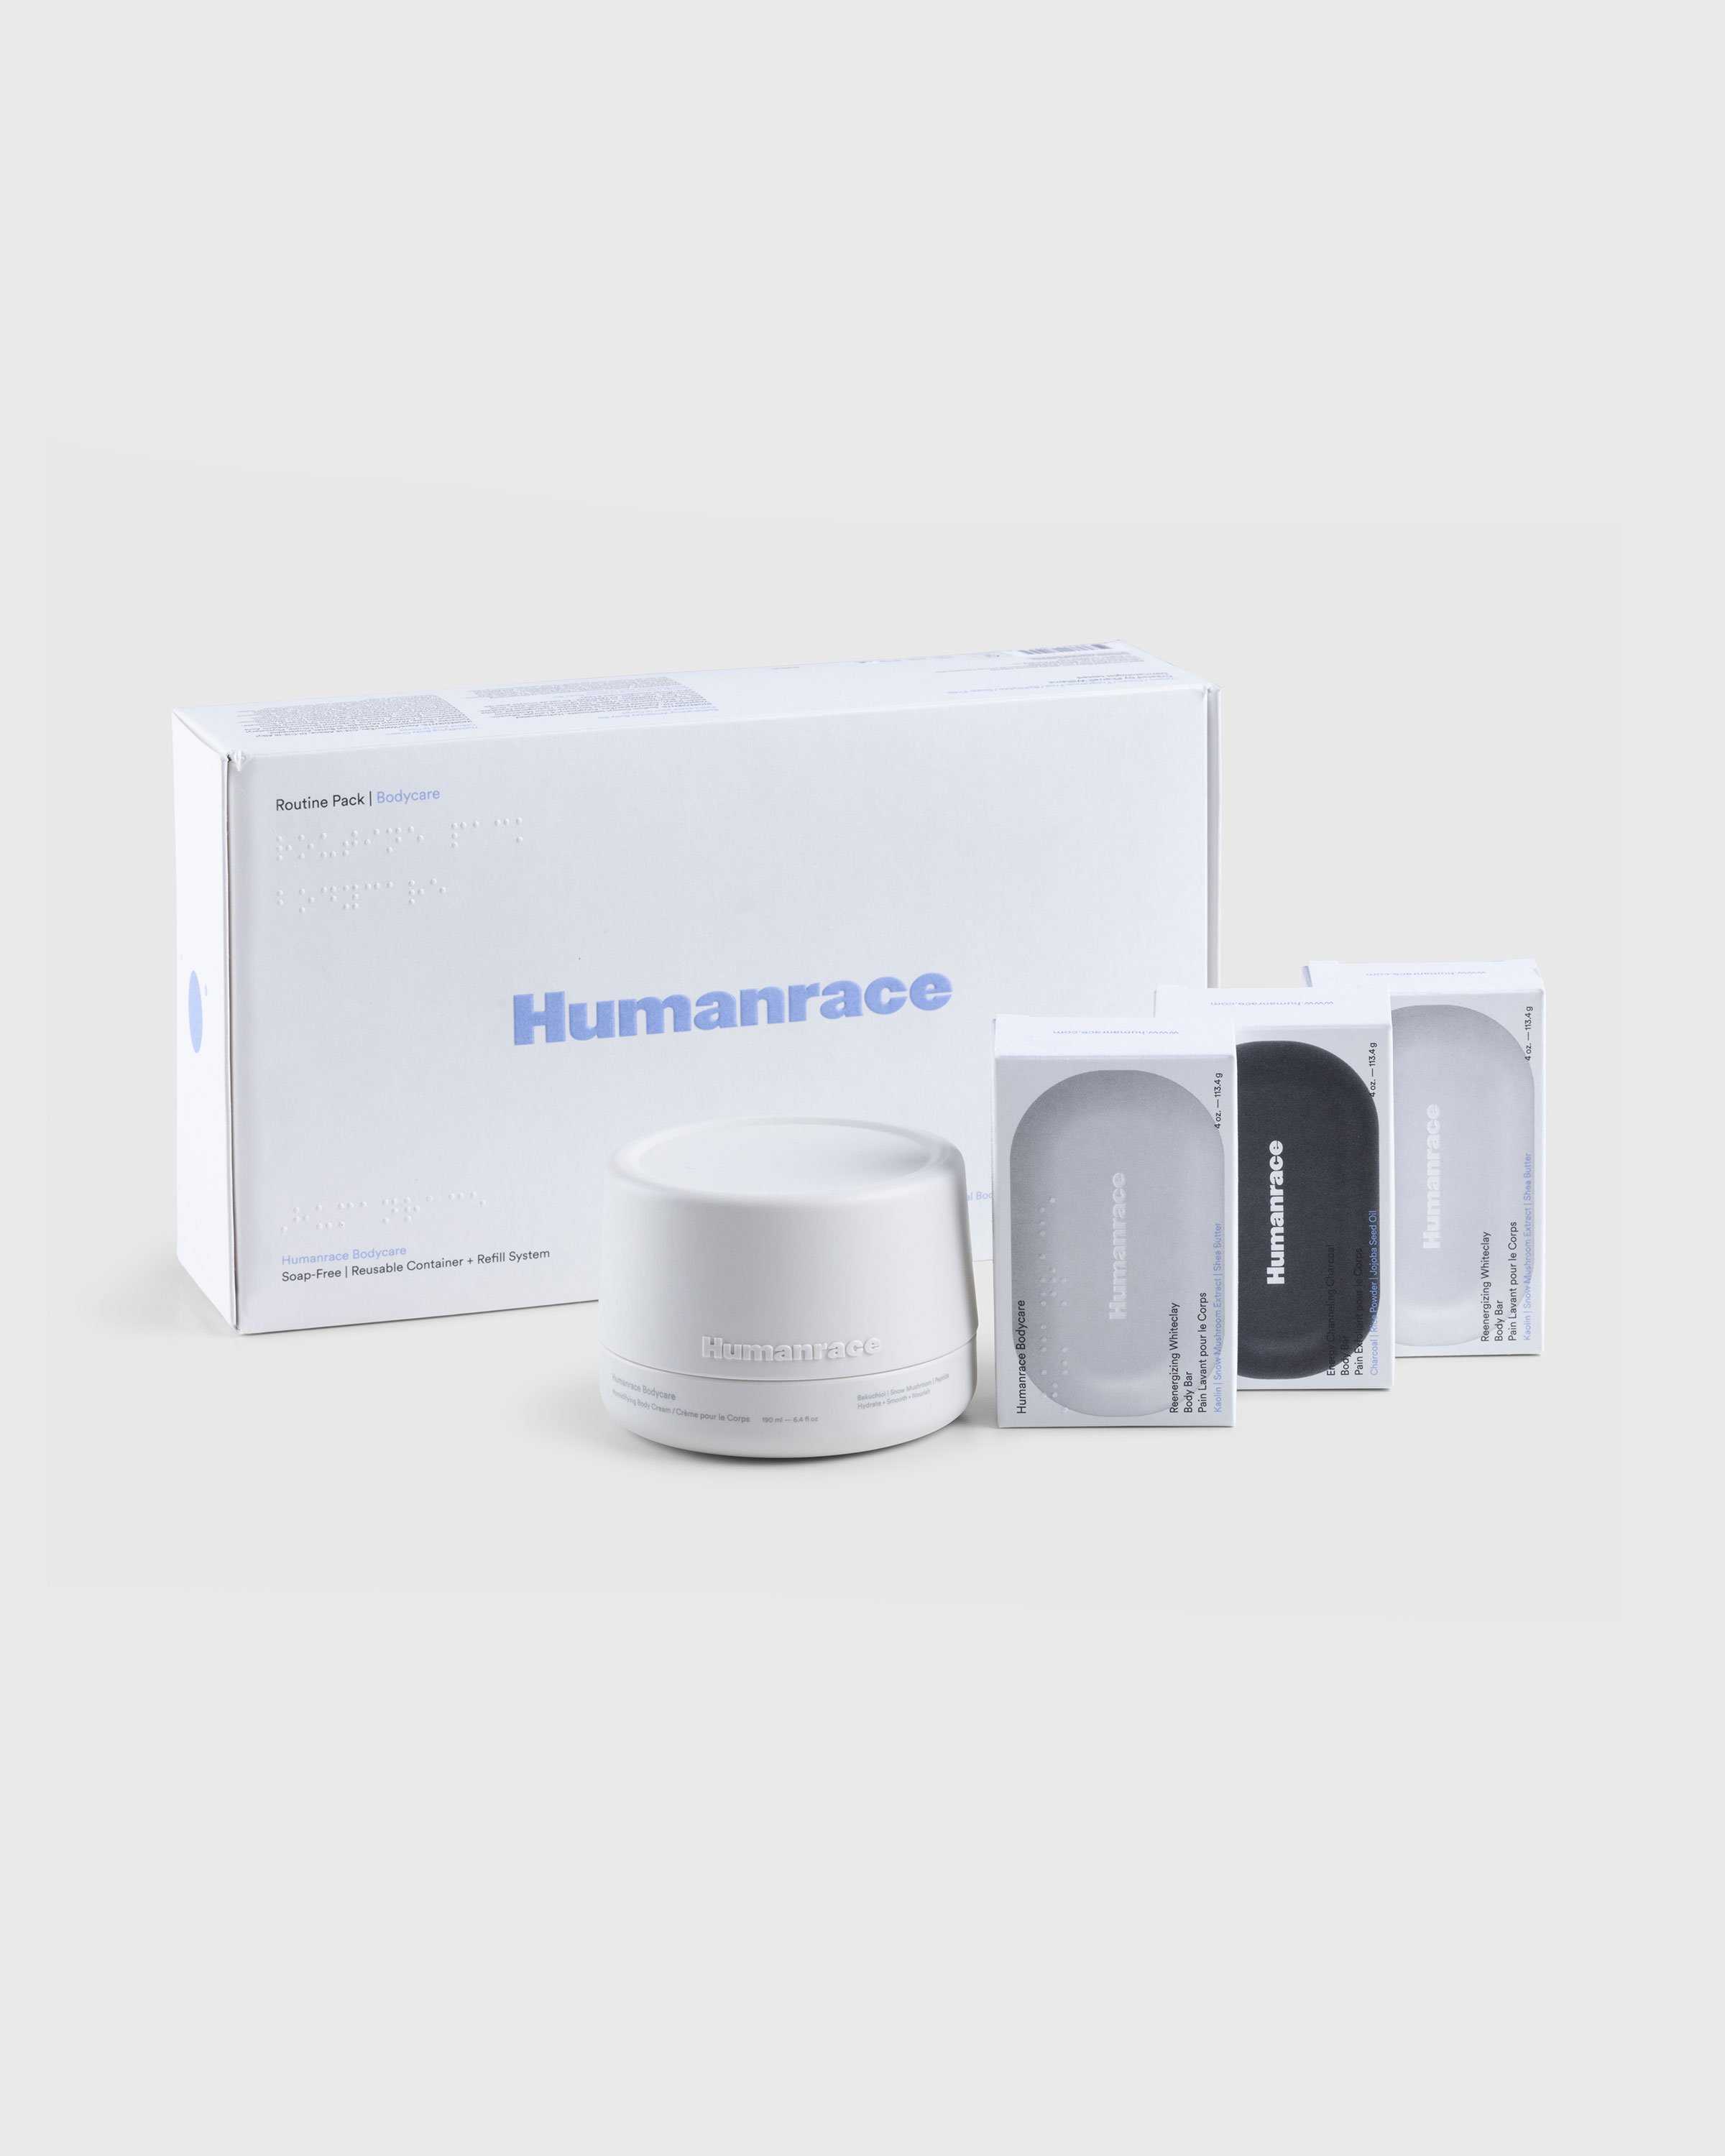 Humanrace - Bodycare Routine Pack - Lifestyle - Multi - Image 1